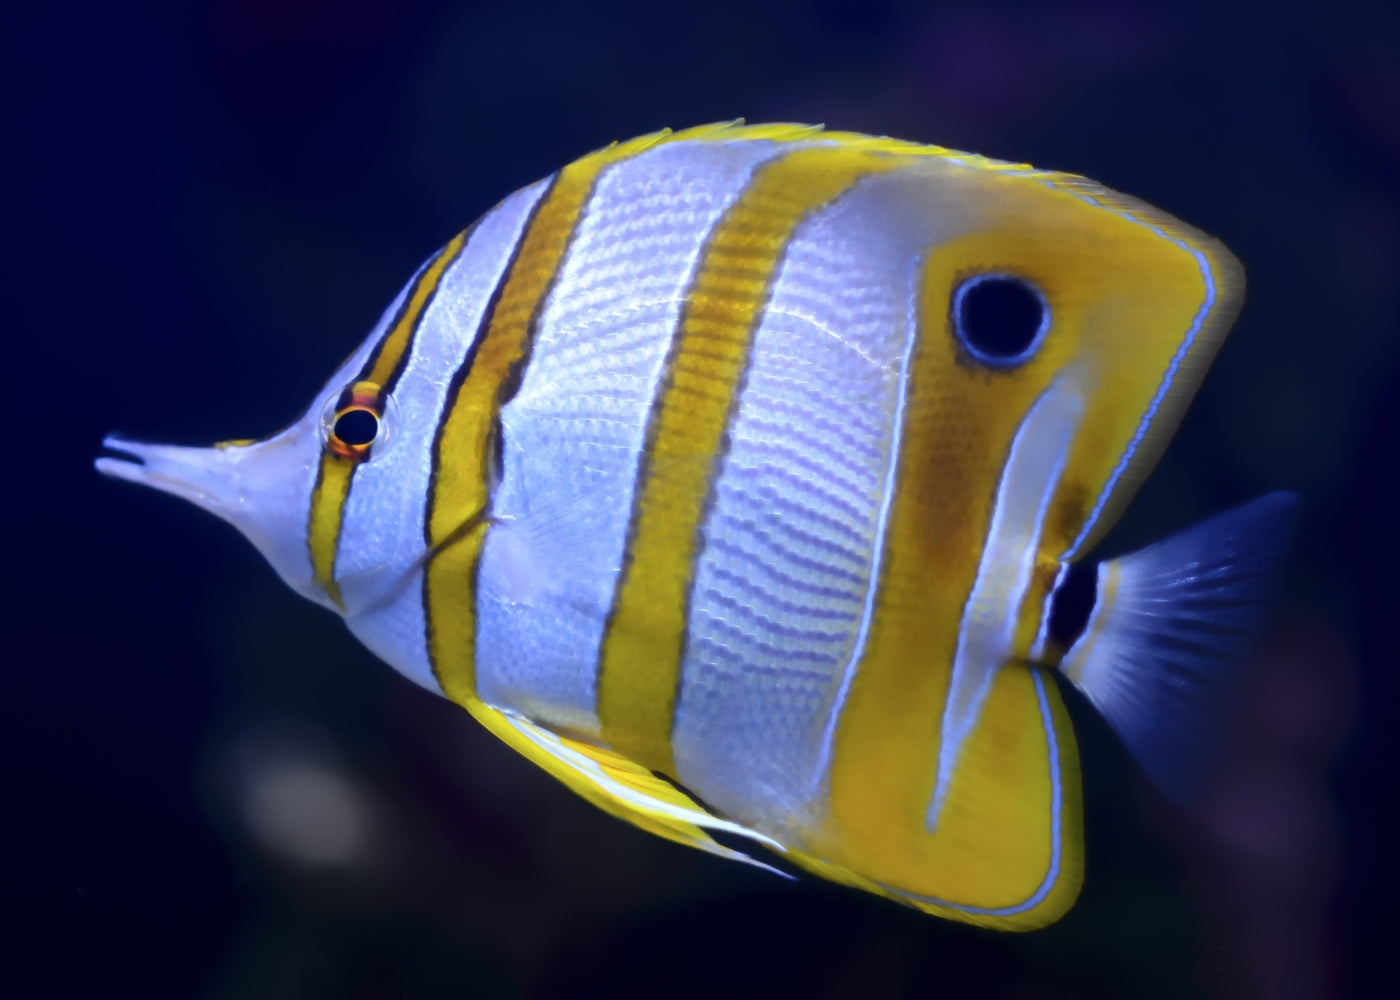 copperband butterflyfish | Marine fish for sale online | Coburg Aquarium